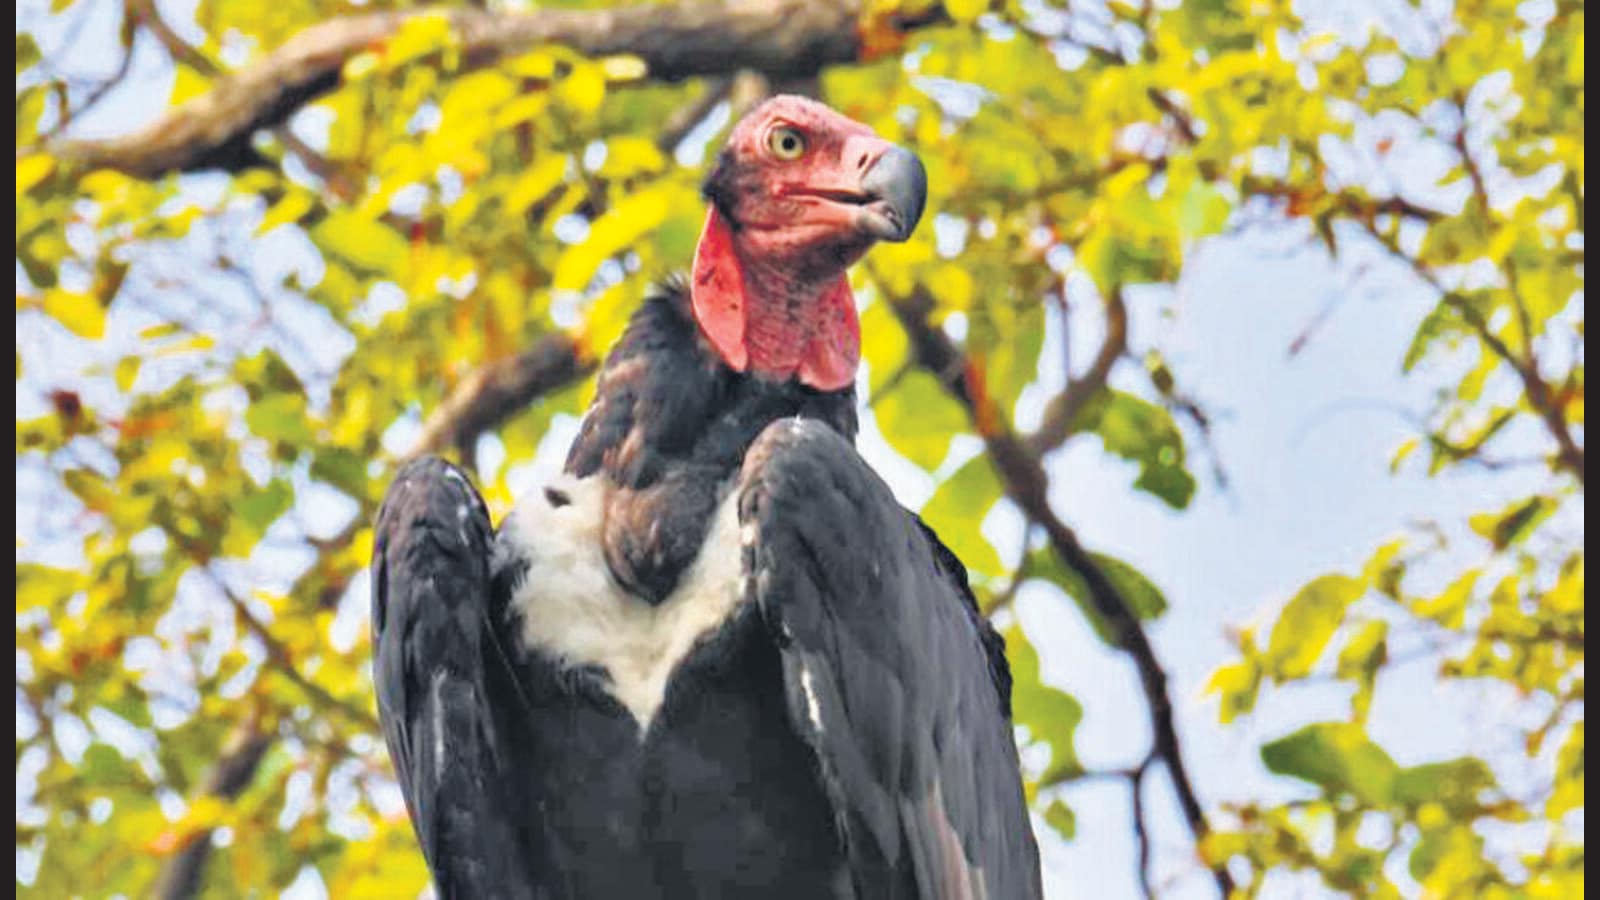 Red-headed vulture seen Delhi's Bhatti first since | Latest News - Hindustan Times